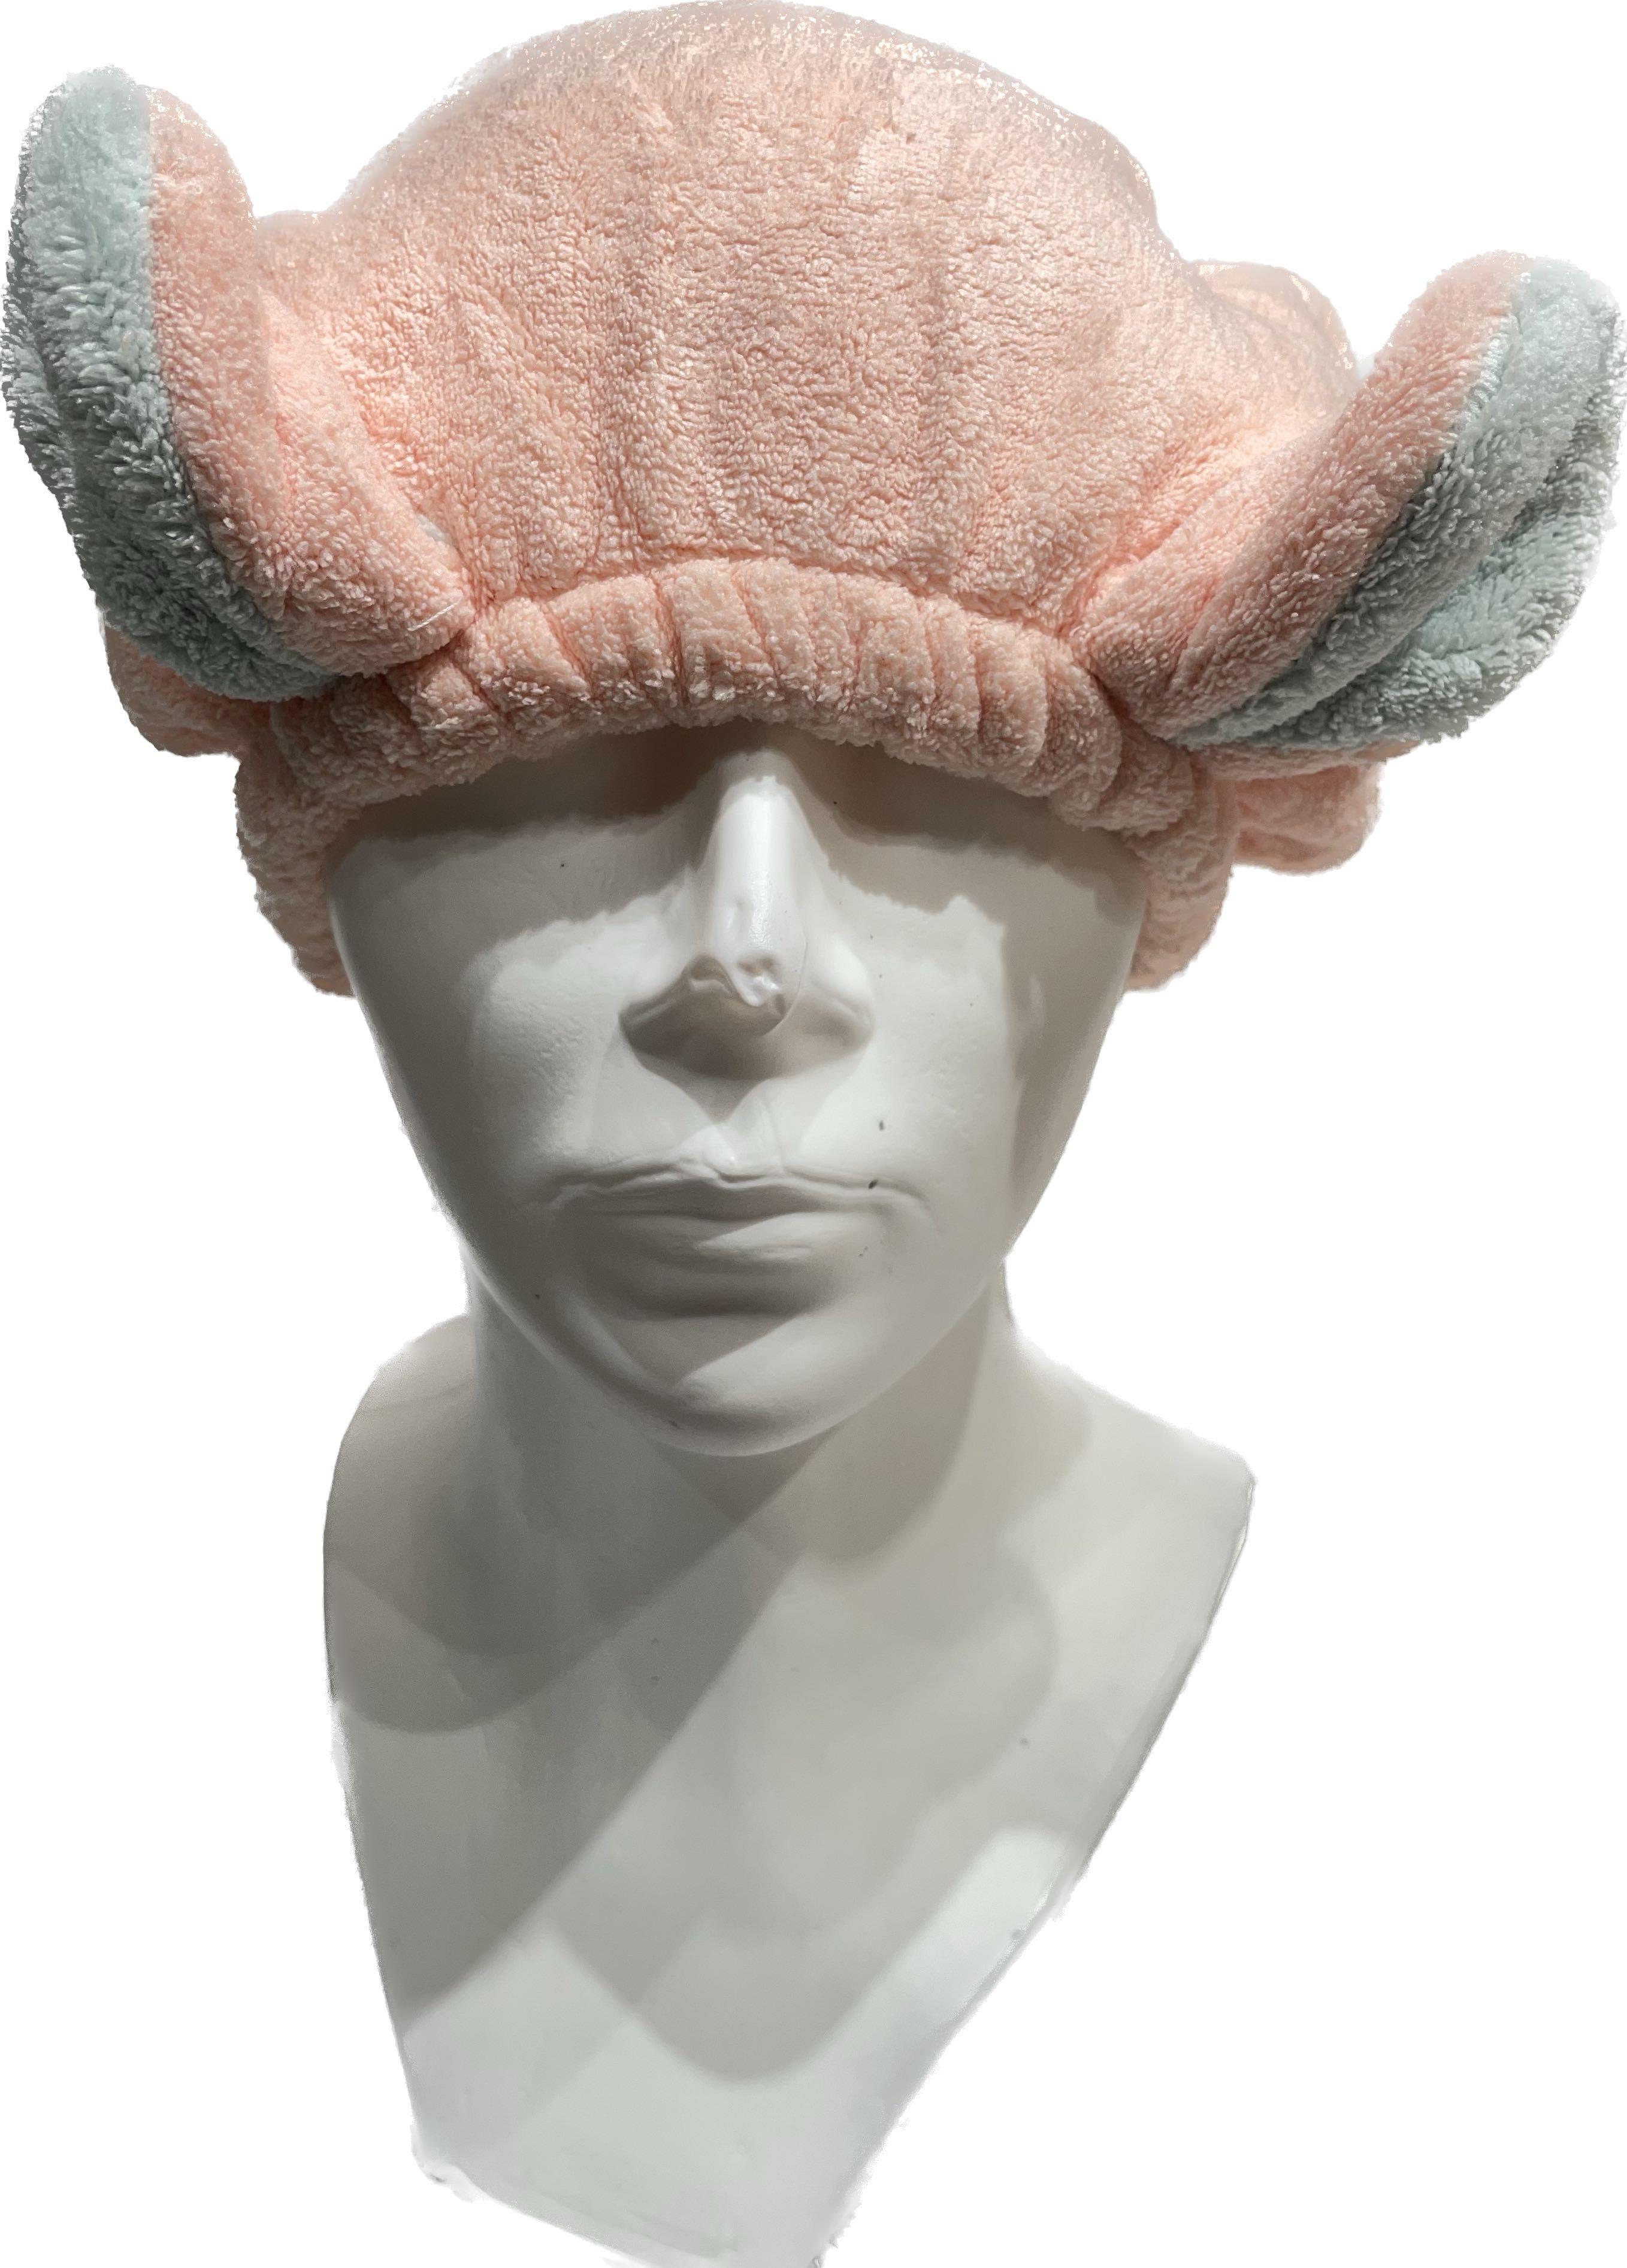 Super absorbent hair towel, hair turban - with ears